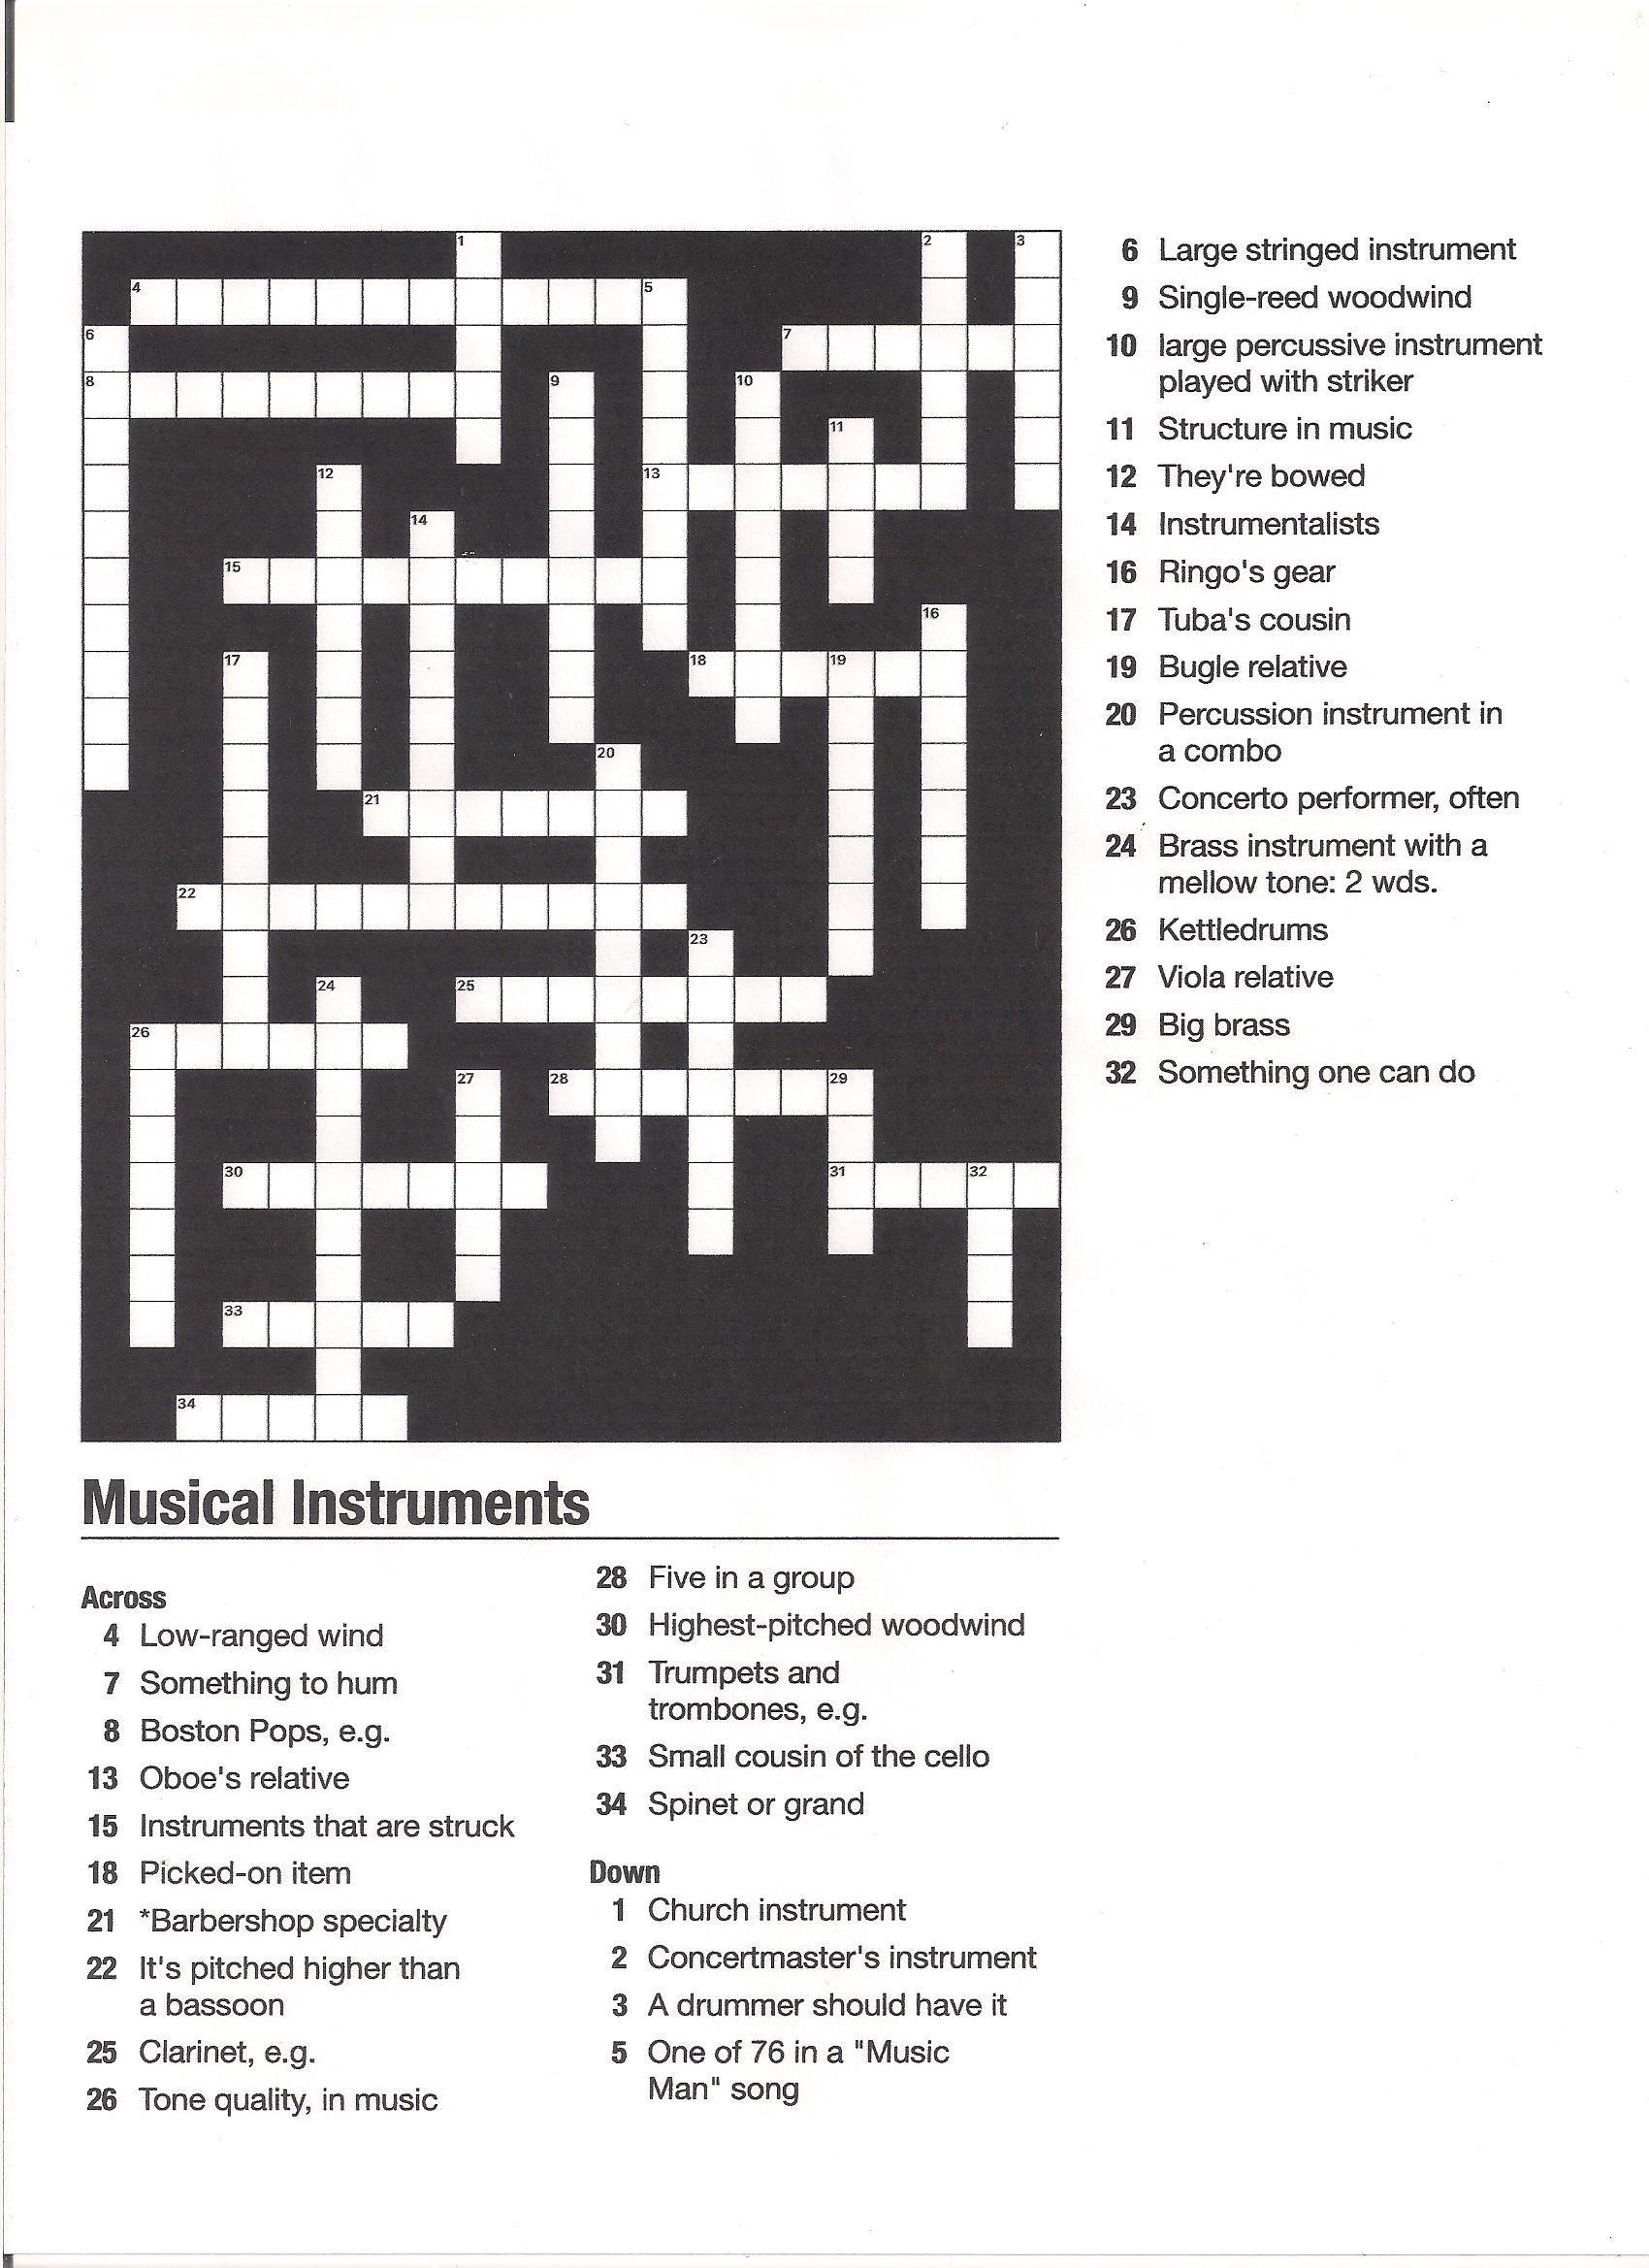 Musical Instruments Crossword Puzzle Studio Notes Online - Easy Listening Music Format Crossword Clue